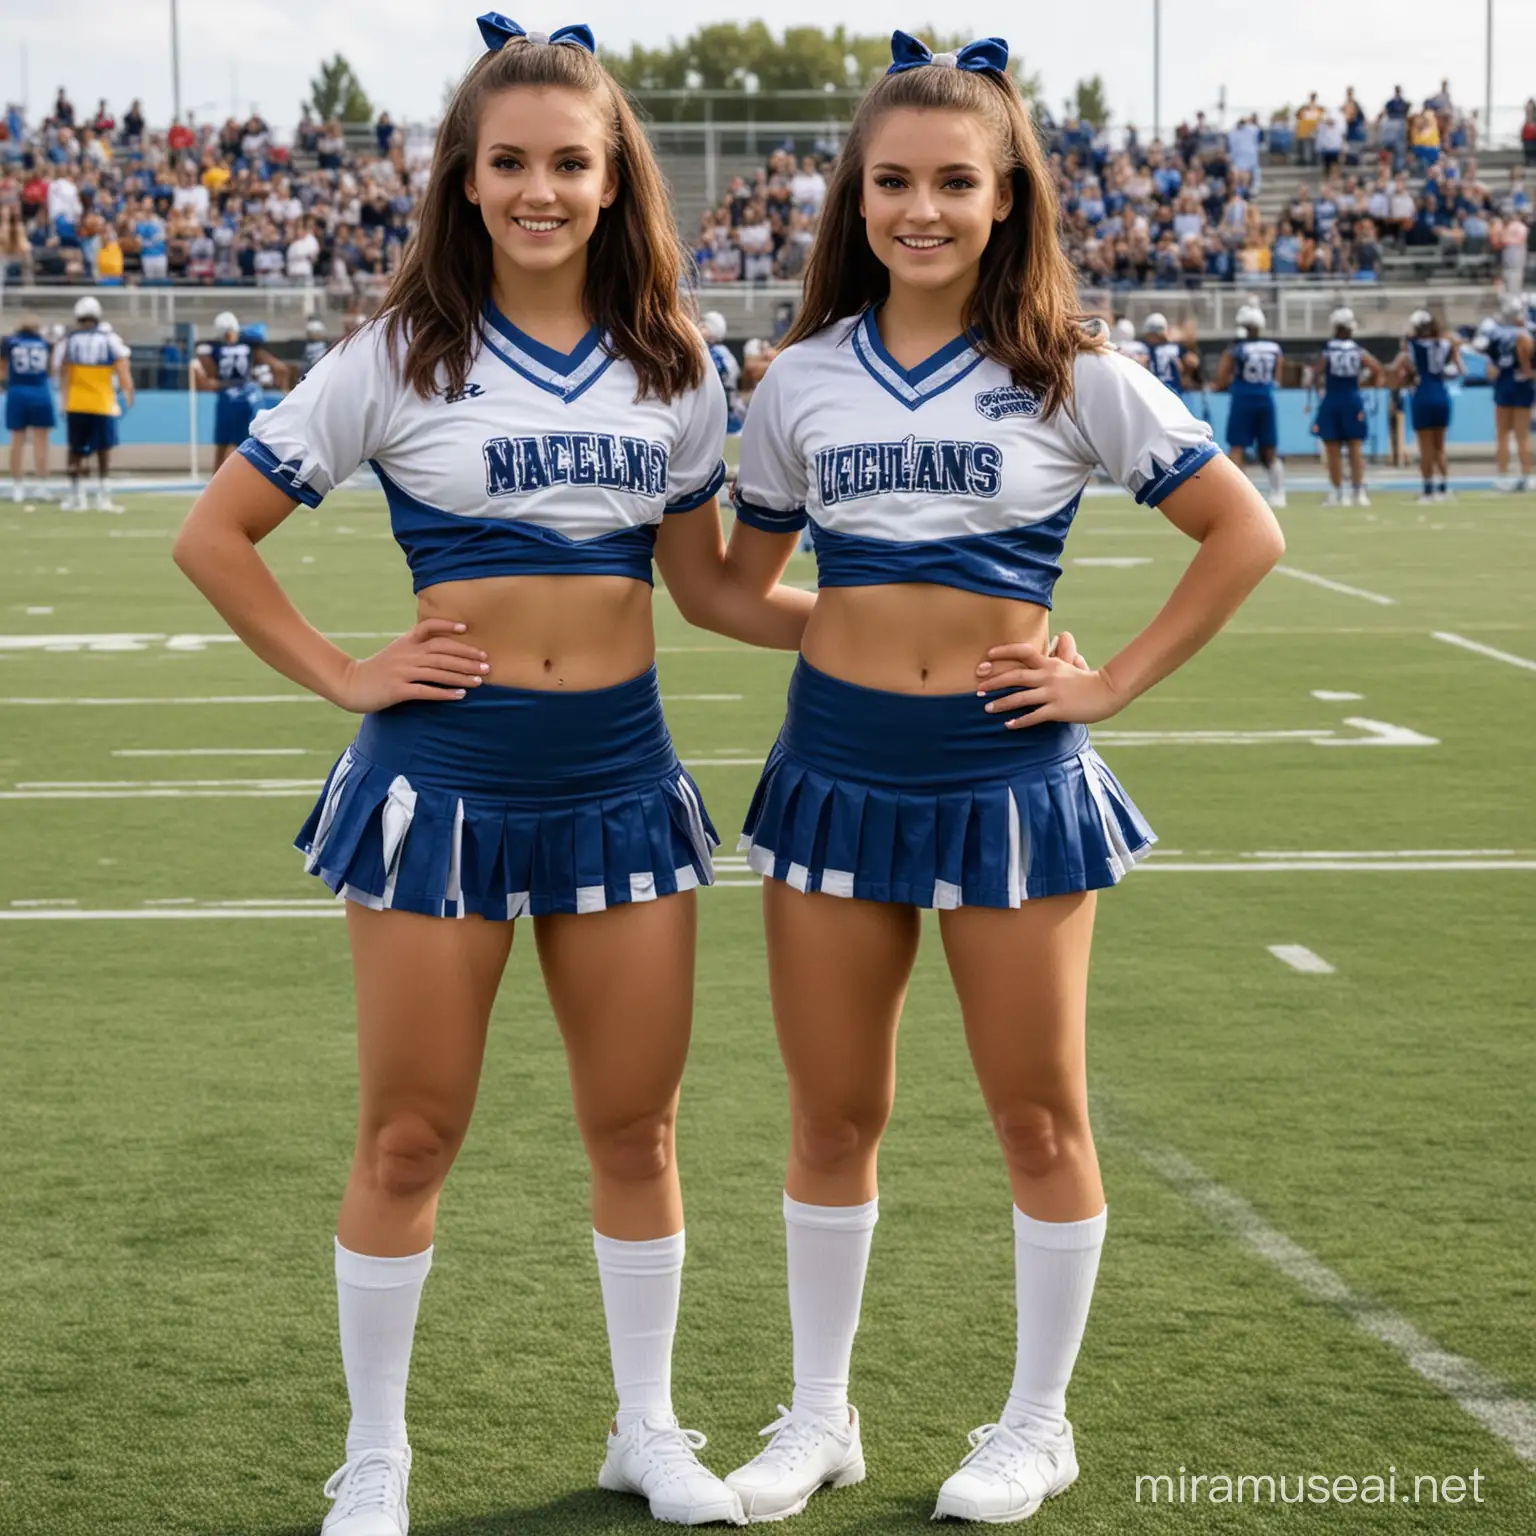 two cheerleaders wearing tops but not wearing skirts or panties, standing in the football field